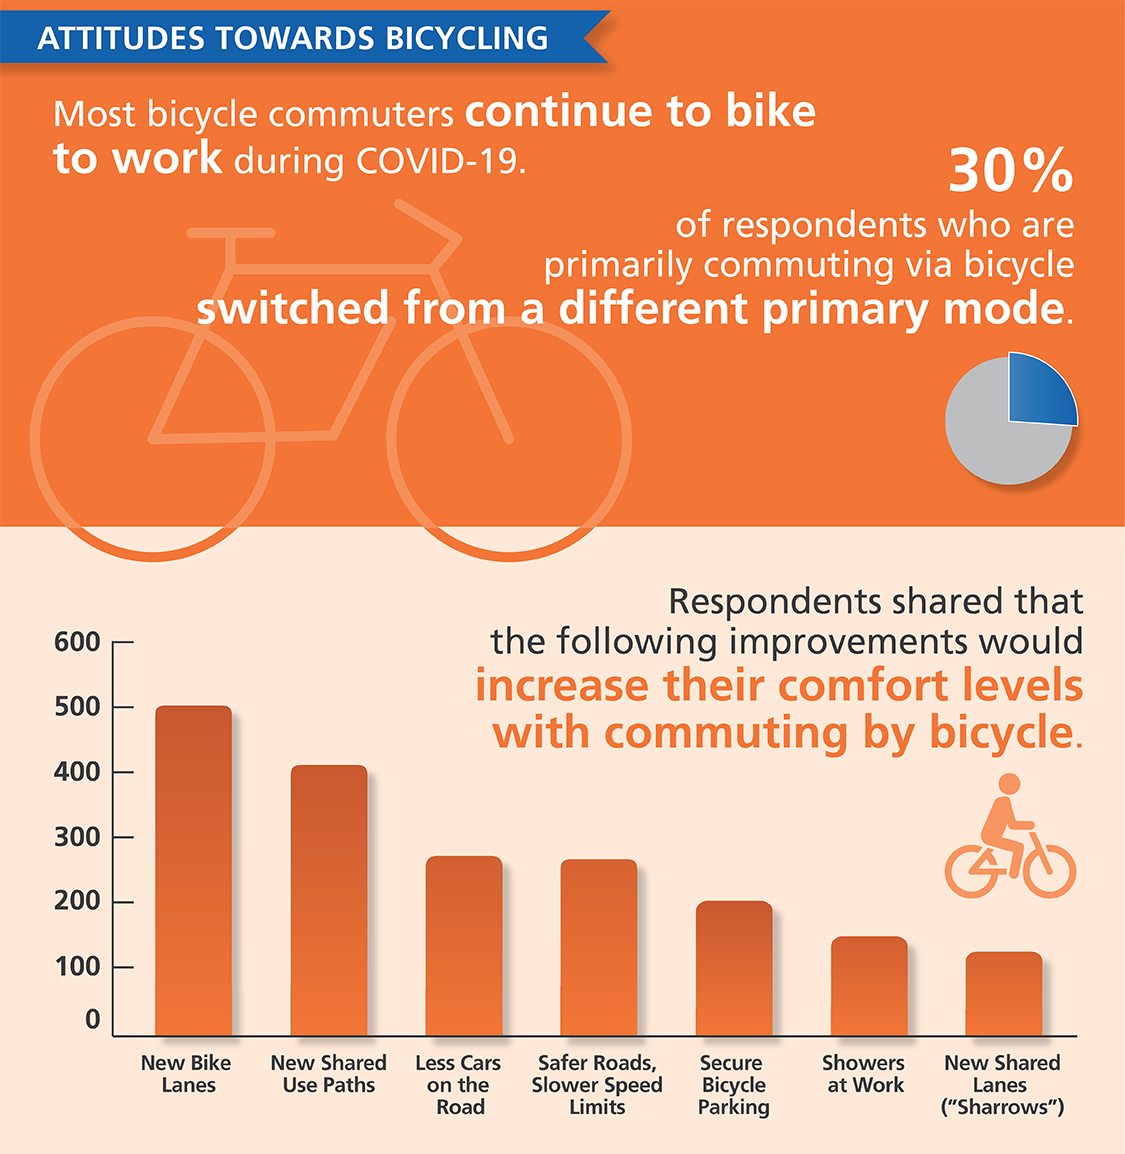 Attitudes towards bicycling